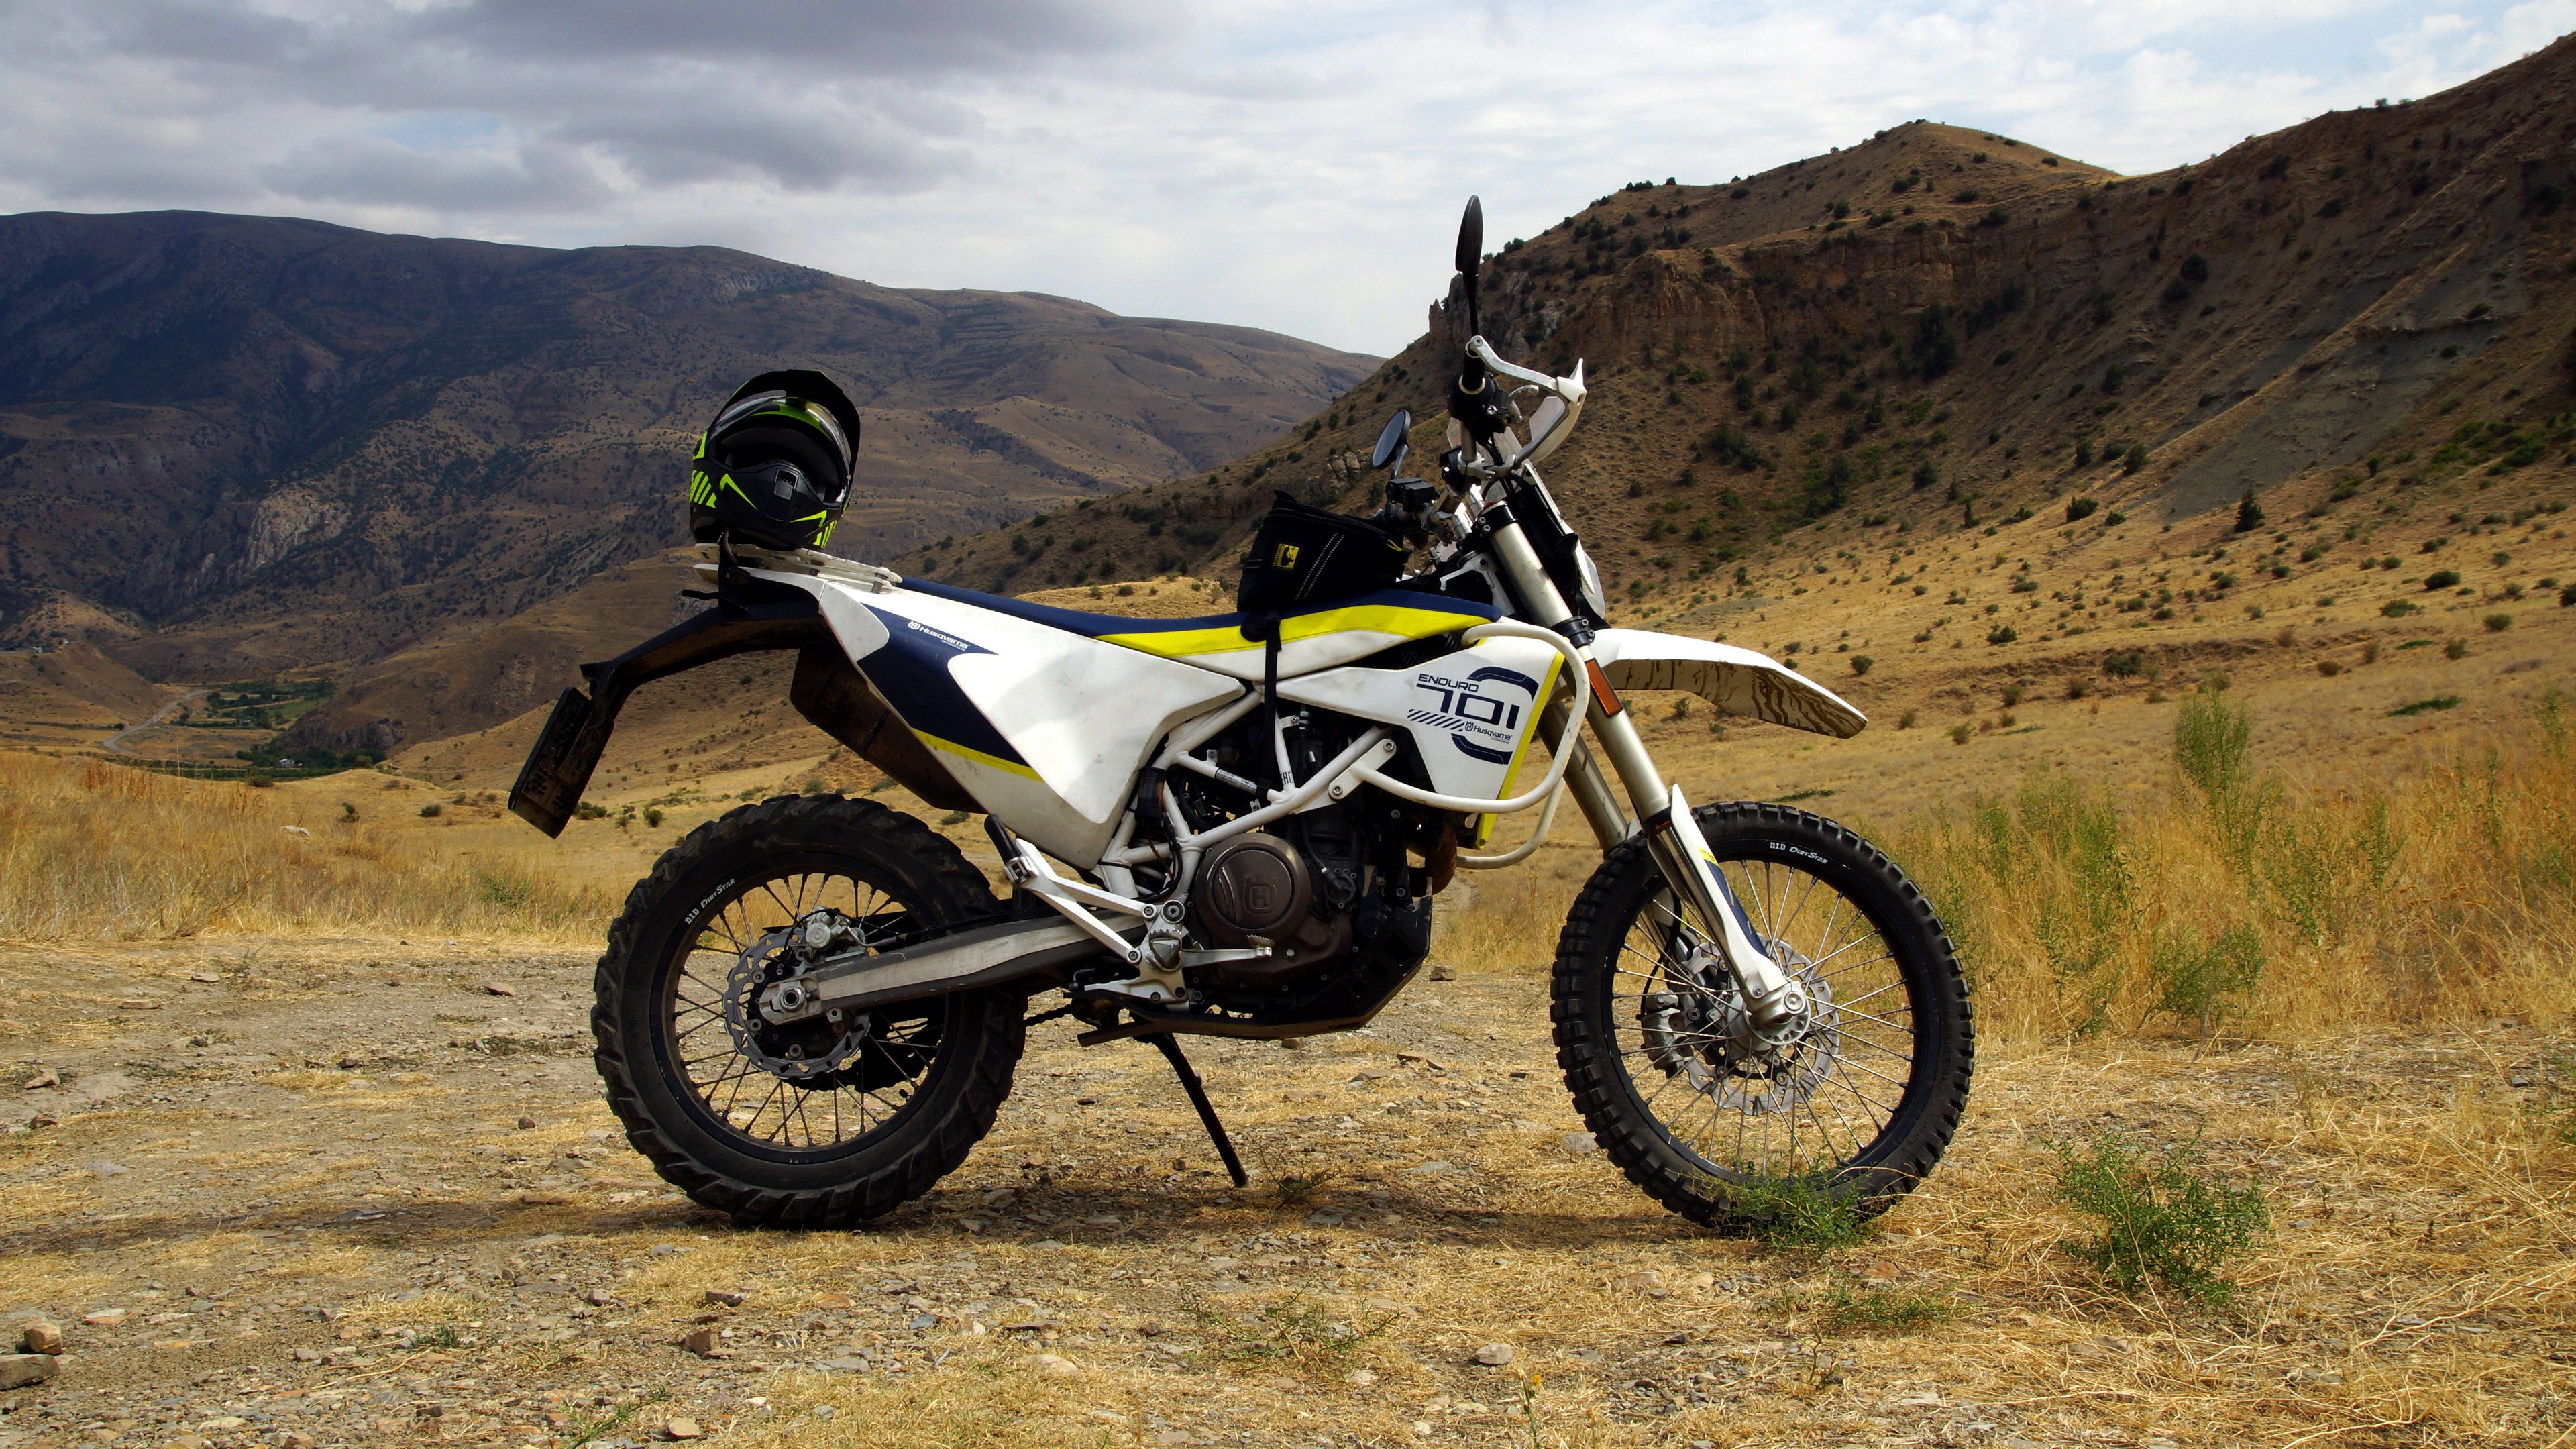 3840x2160 Wallpaper motorcycle, bike, mountains, nature